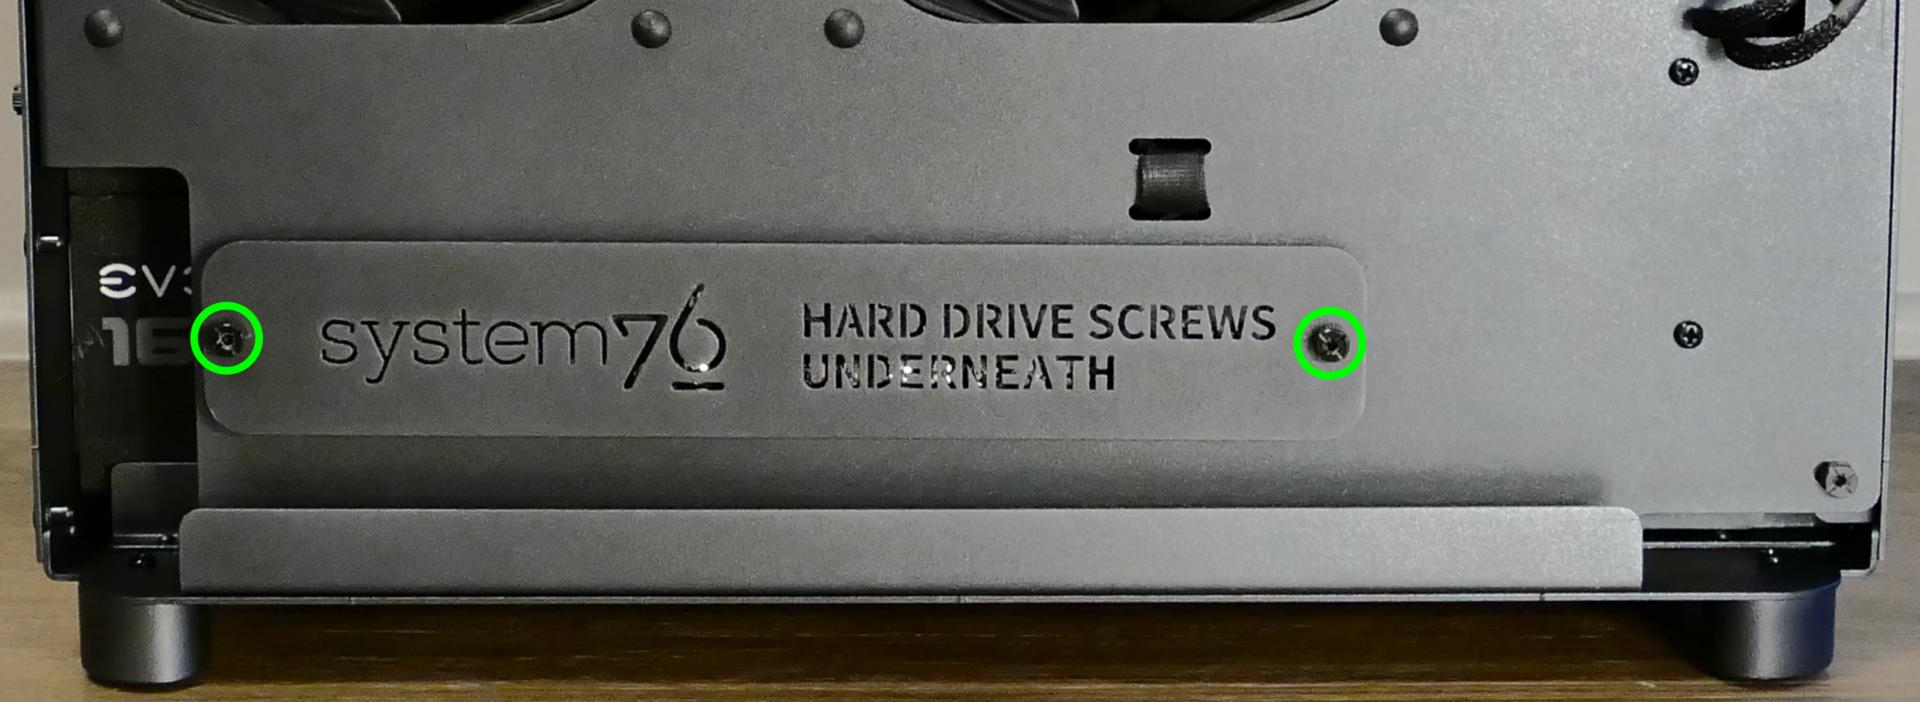 Storage drive screw cover